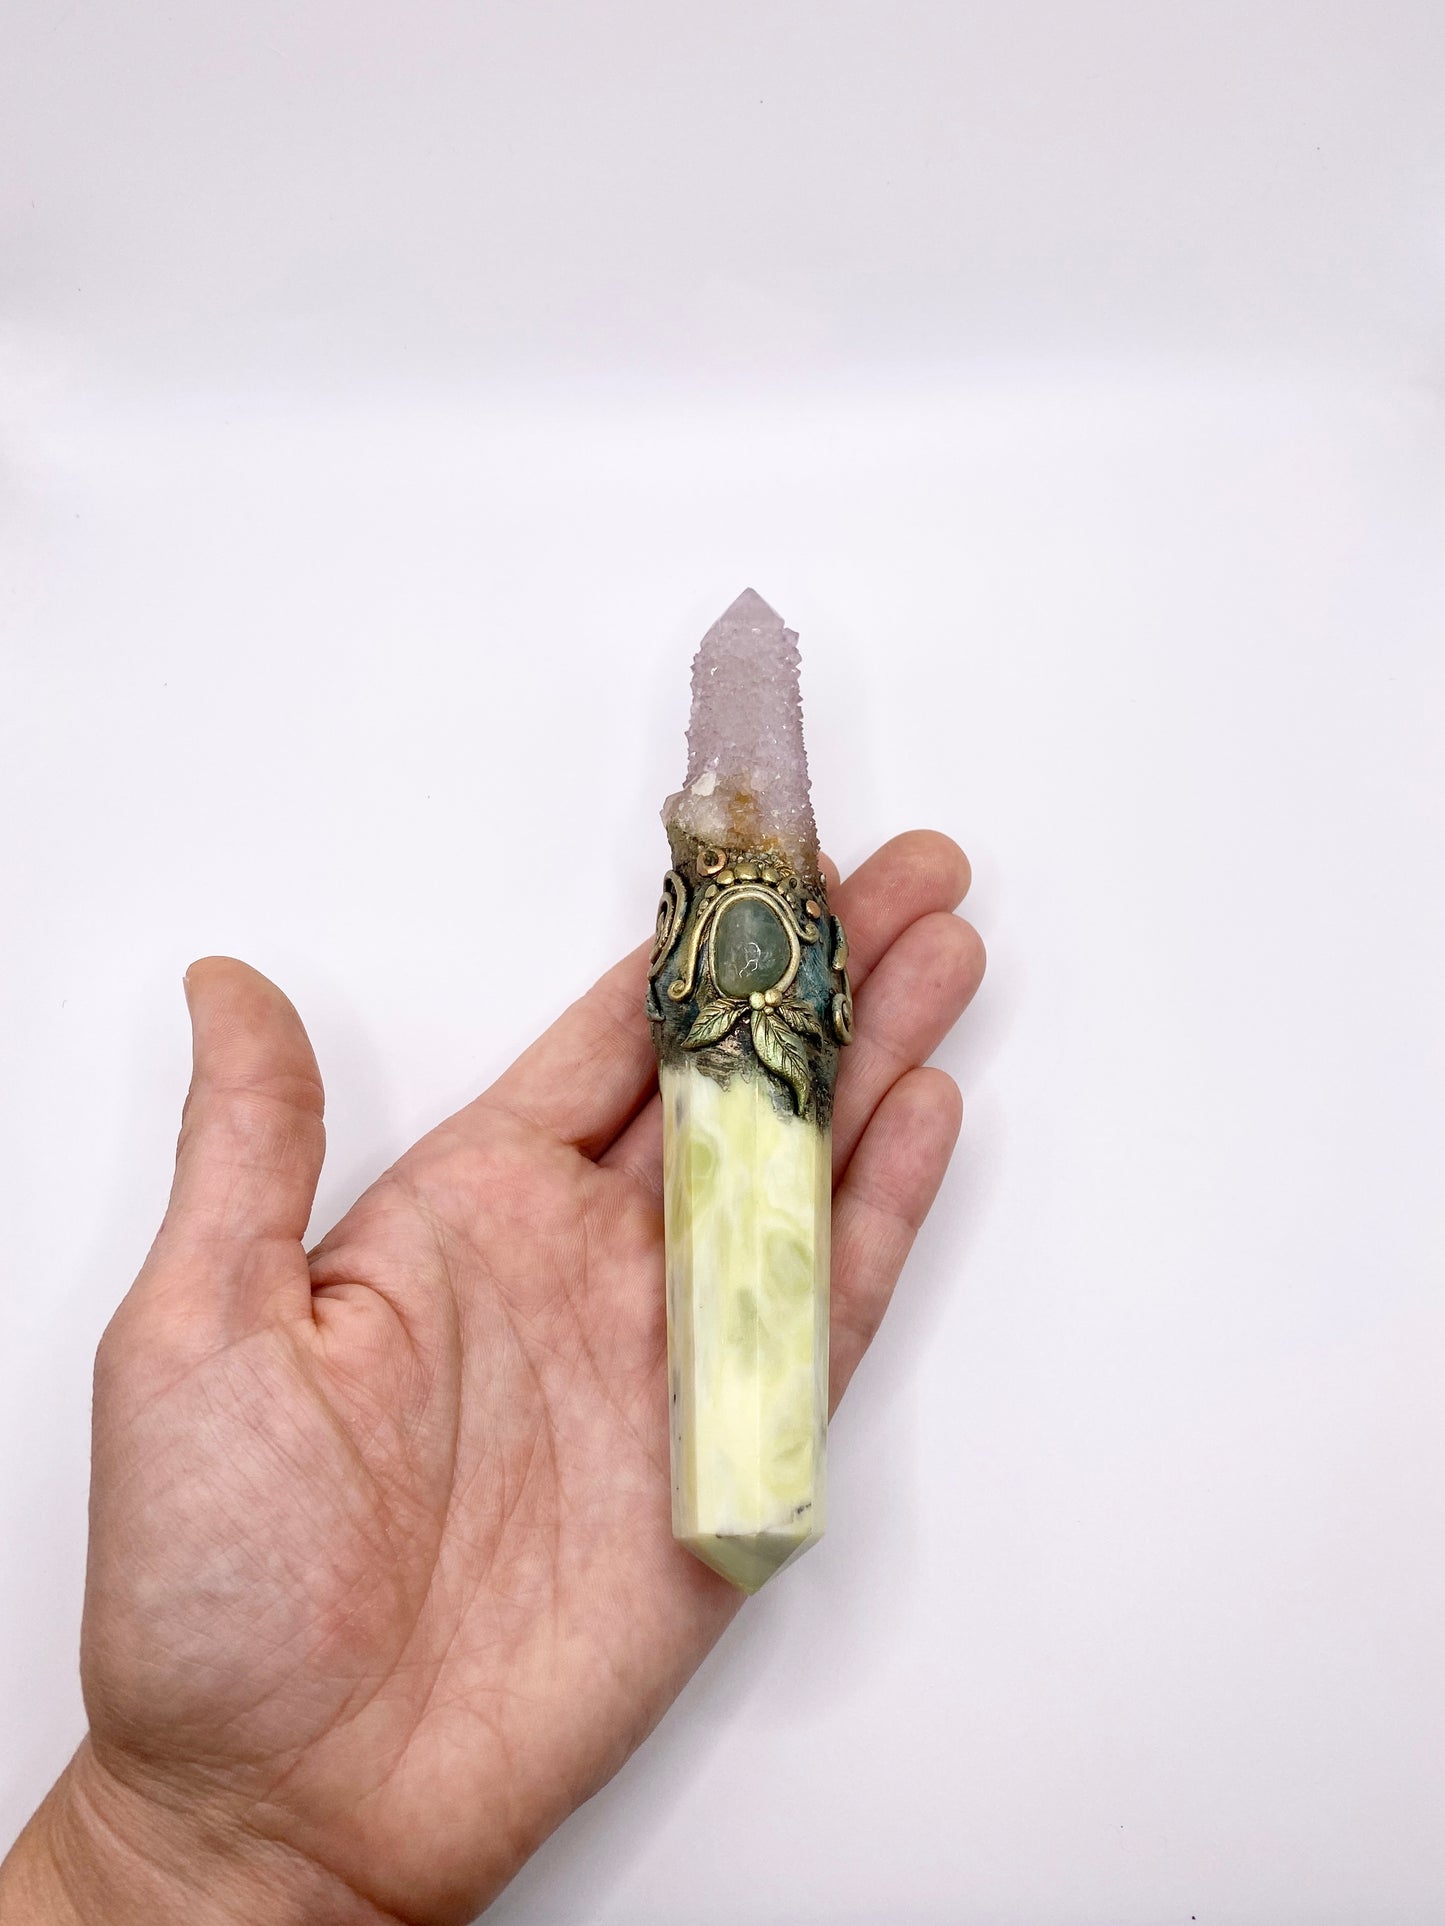 Crystal Energy Wand with Serpentine, Aquamarine and Amethyst Spirit Quartz - Reversible Metaphysical Wand